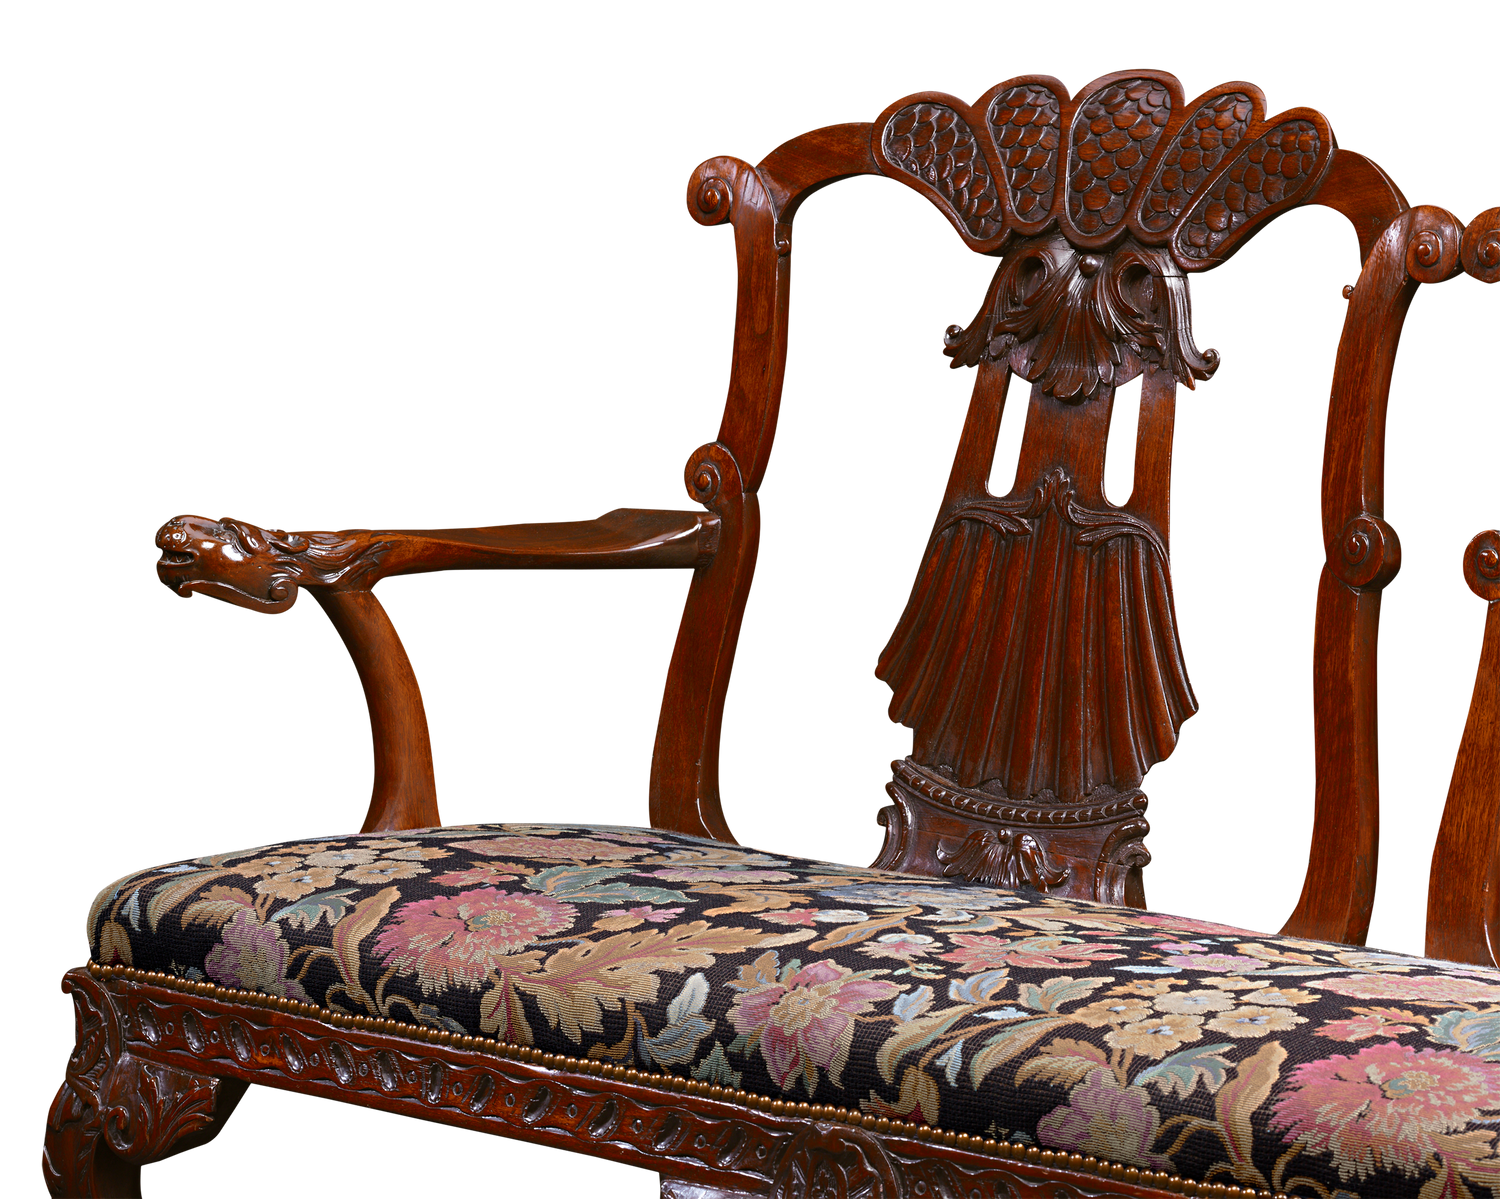 George II Style Mahogany Double Chair Settee